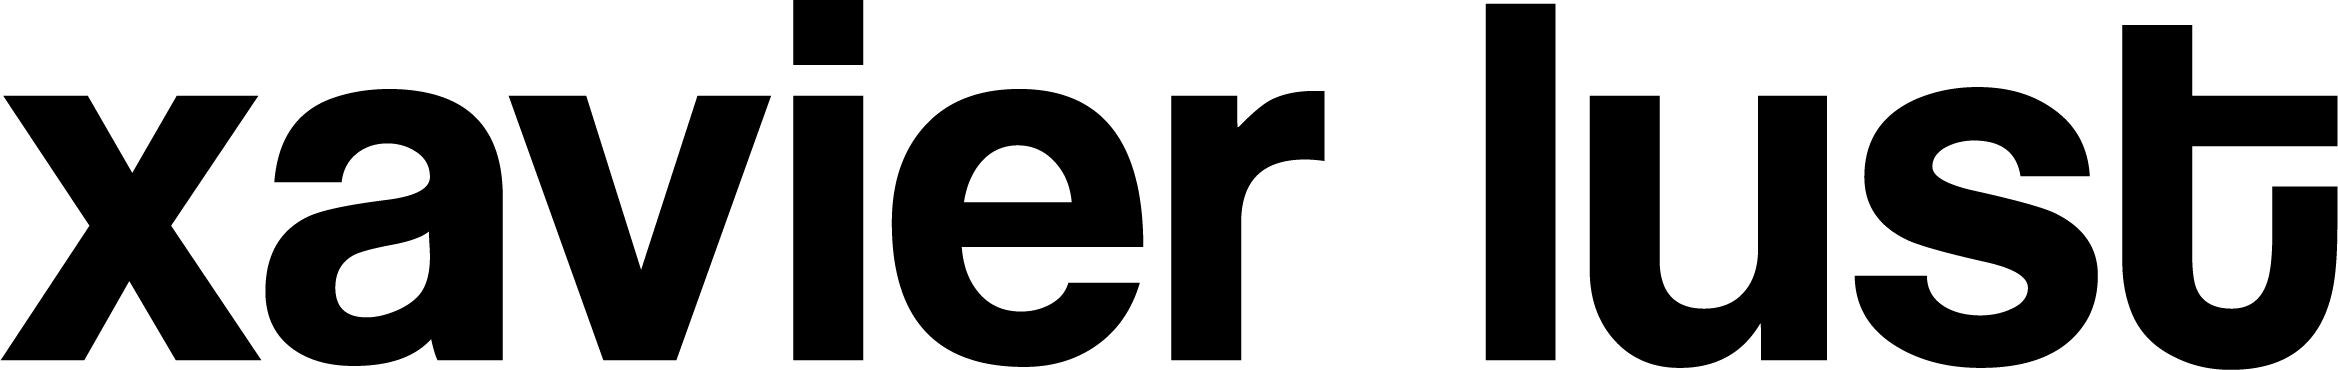 xavierlust logo cool - black